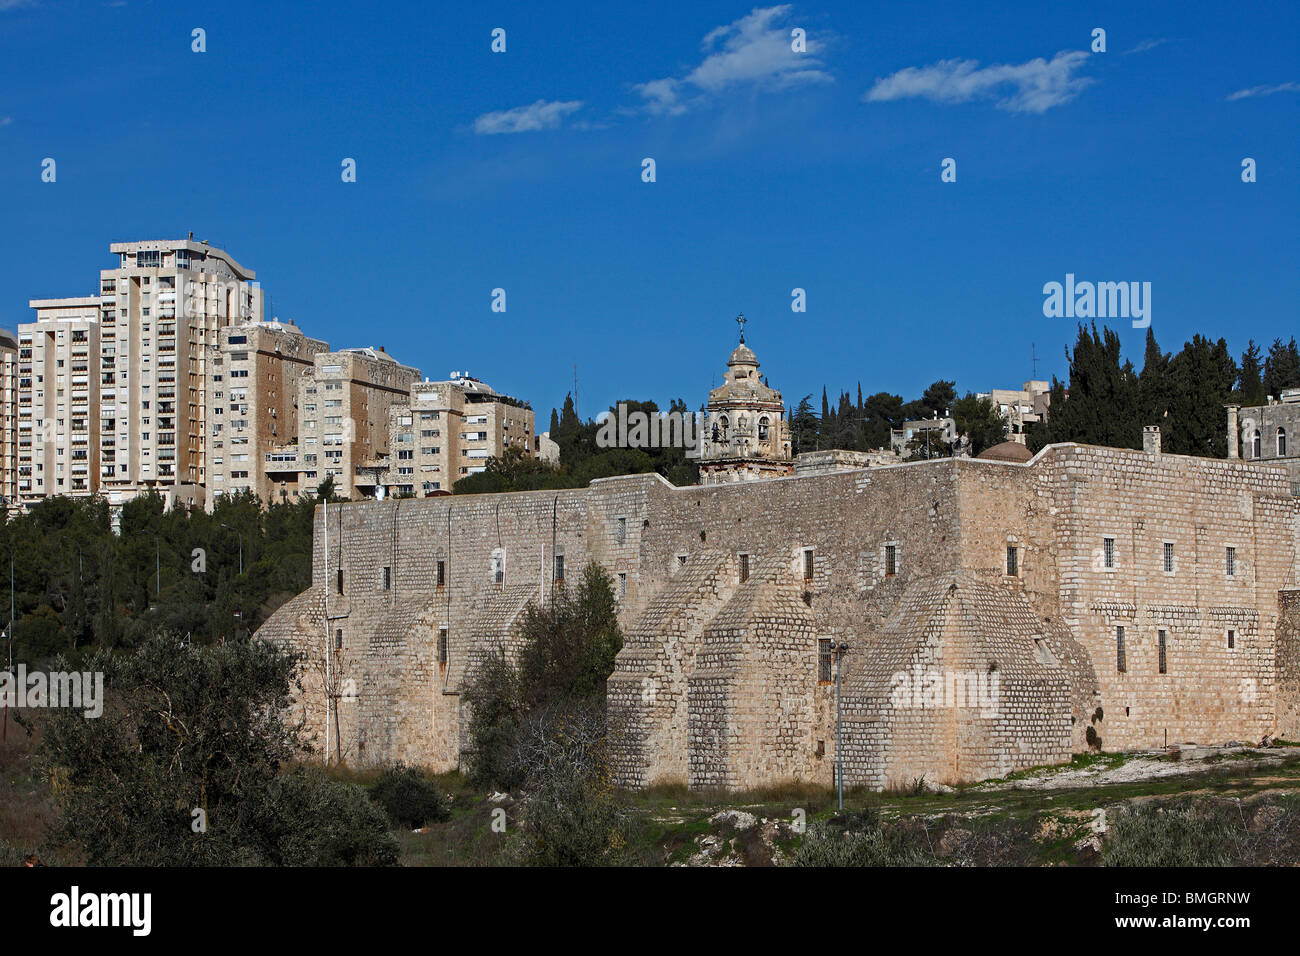 Israel,Jerusalem,St. Cross Monastery,Greek Orthodox Patriarchate,fortified walls Stock Photo